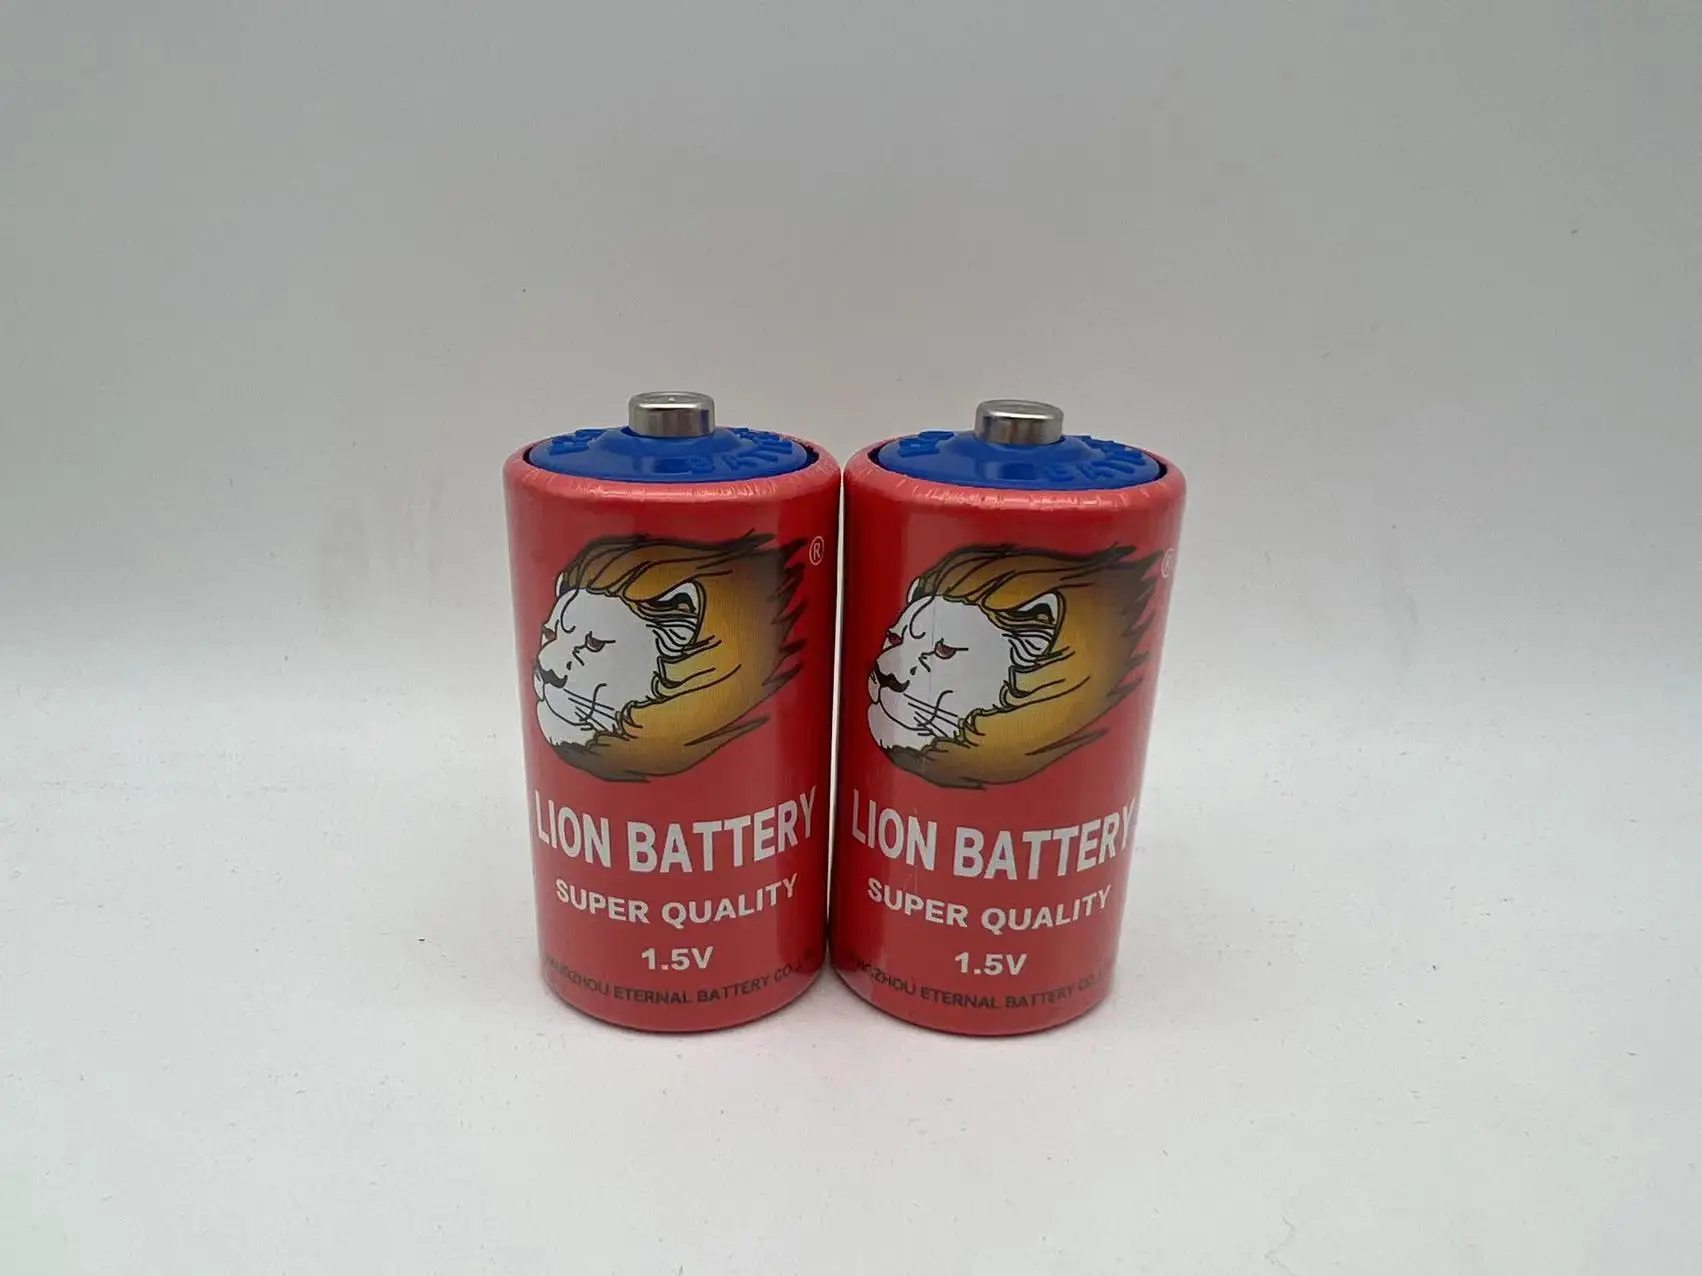 Lion battery